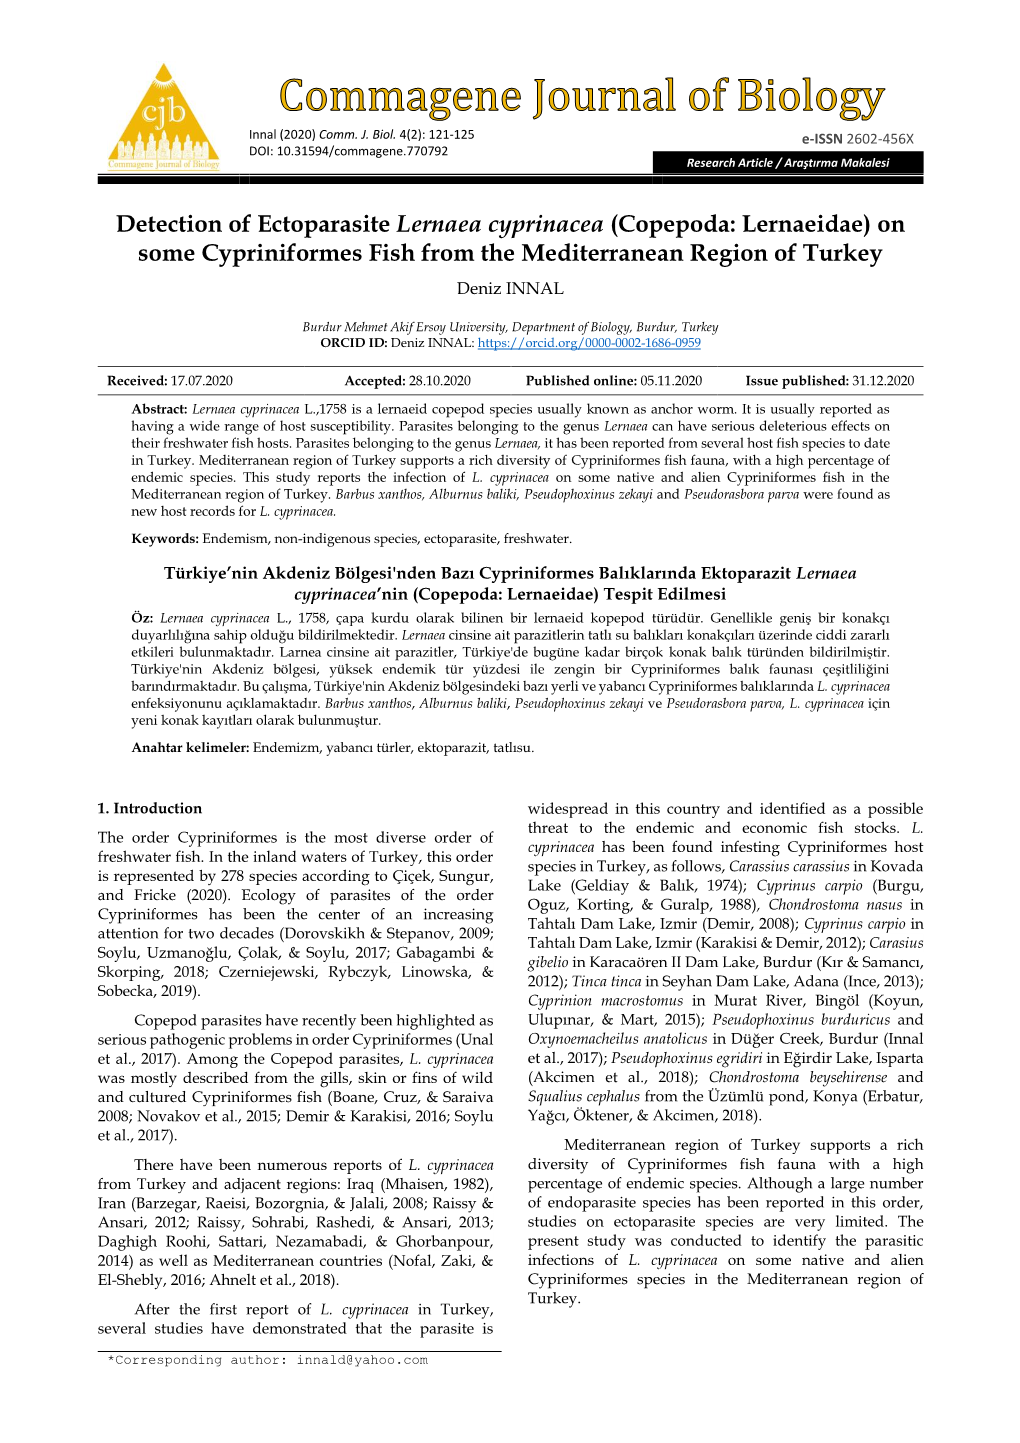 Detection of Ectoparasite Lernaea Cyprinacea (Copepoda: Lernaeidae) on Some Cypriniformes Fish from the Mediterranean Region of Turkey Deniz INNAL